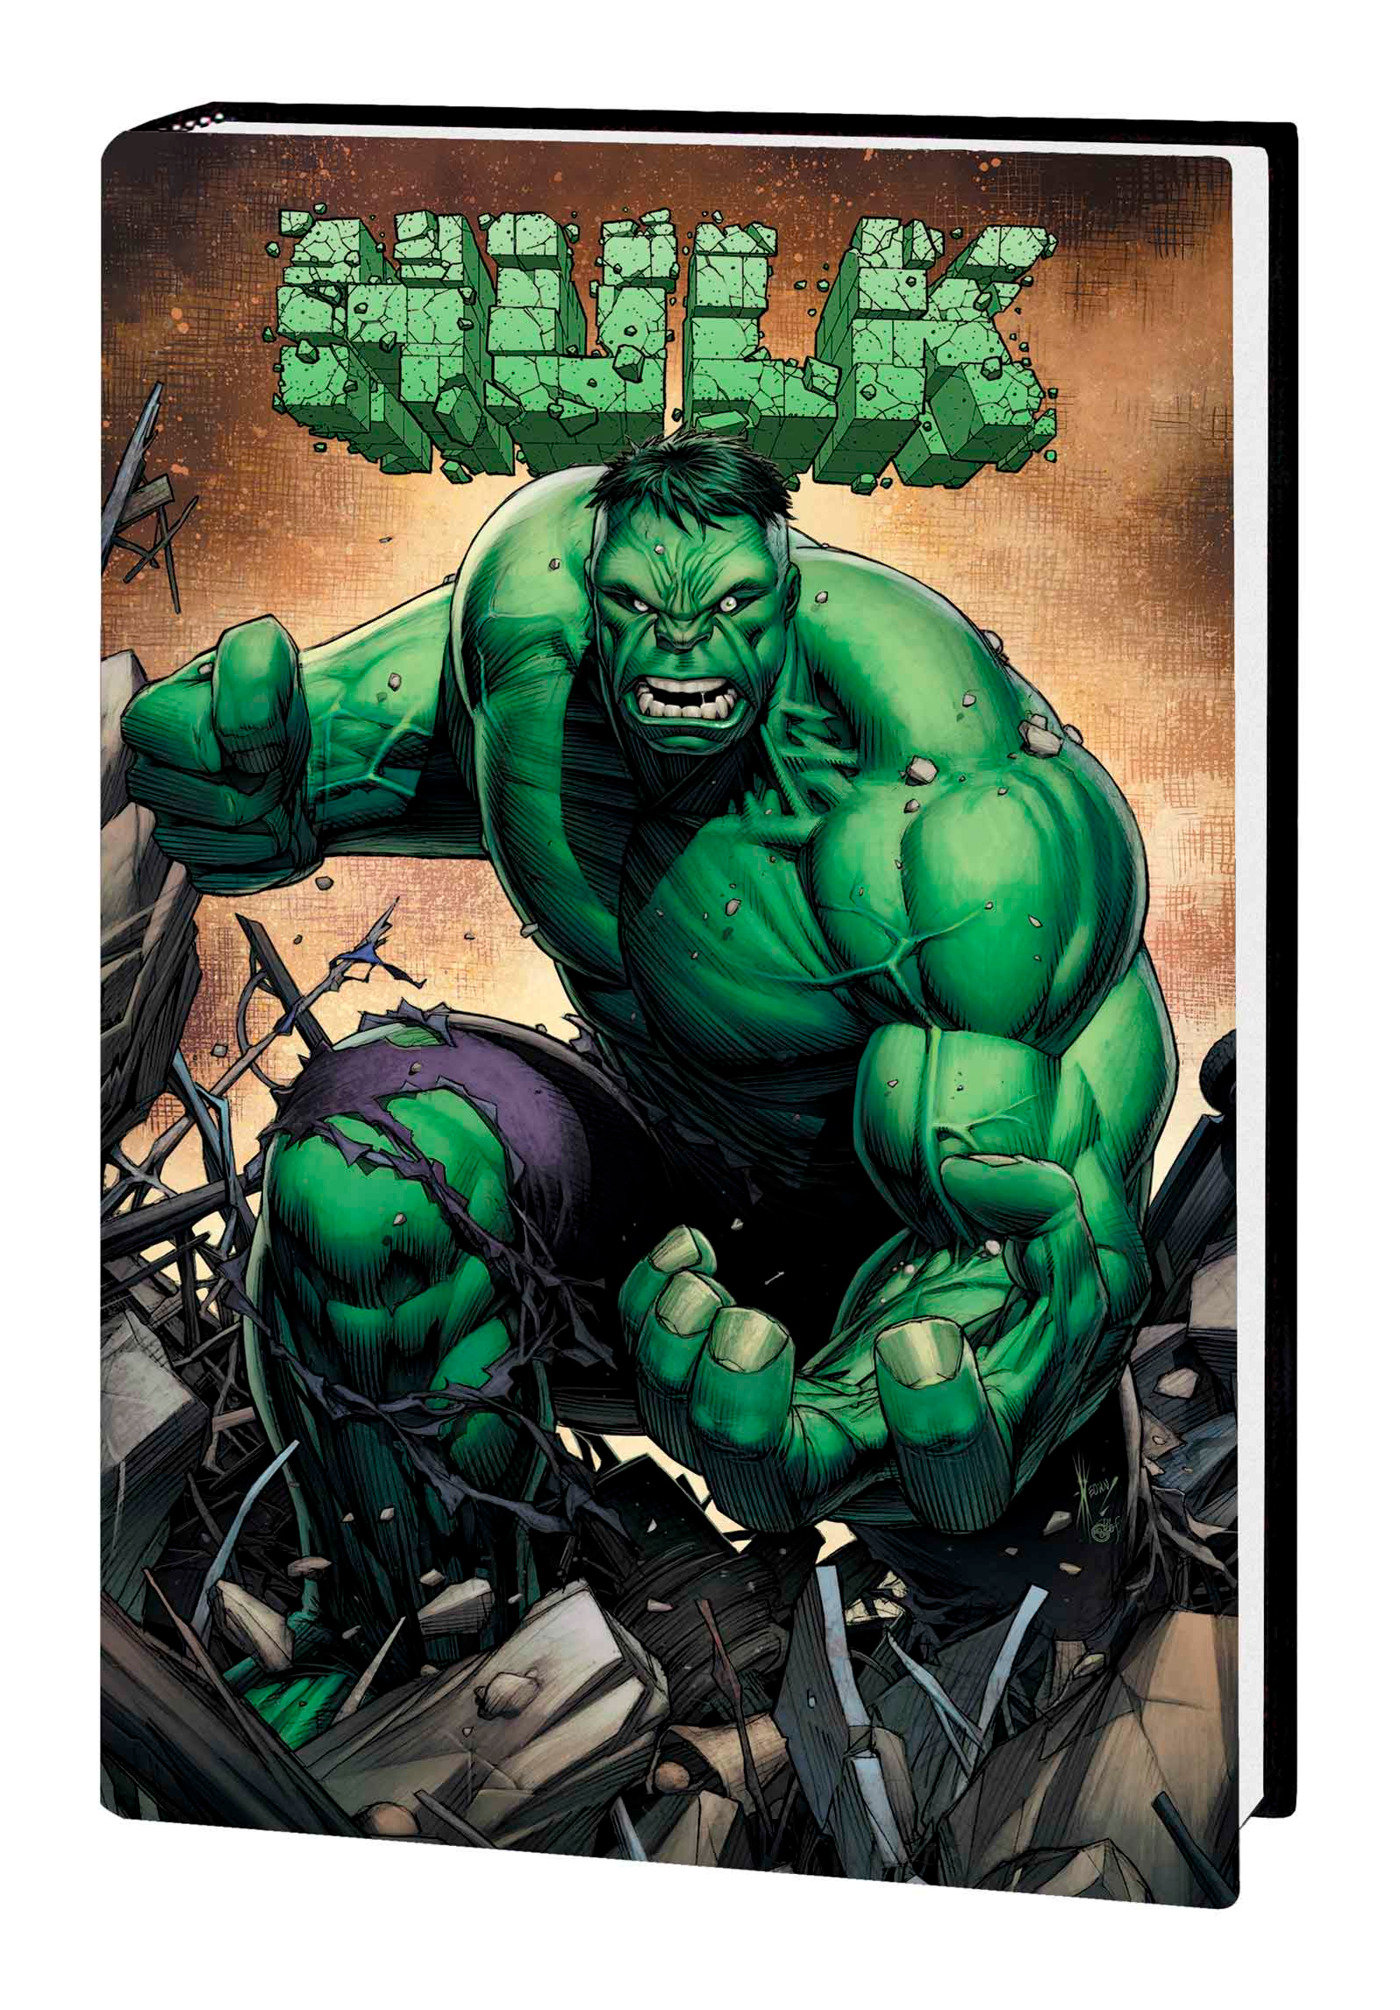 Incredible Hulk by Peter David Omnibus Hardcover Volume 5 Keown Direct Market Variant